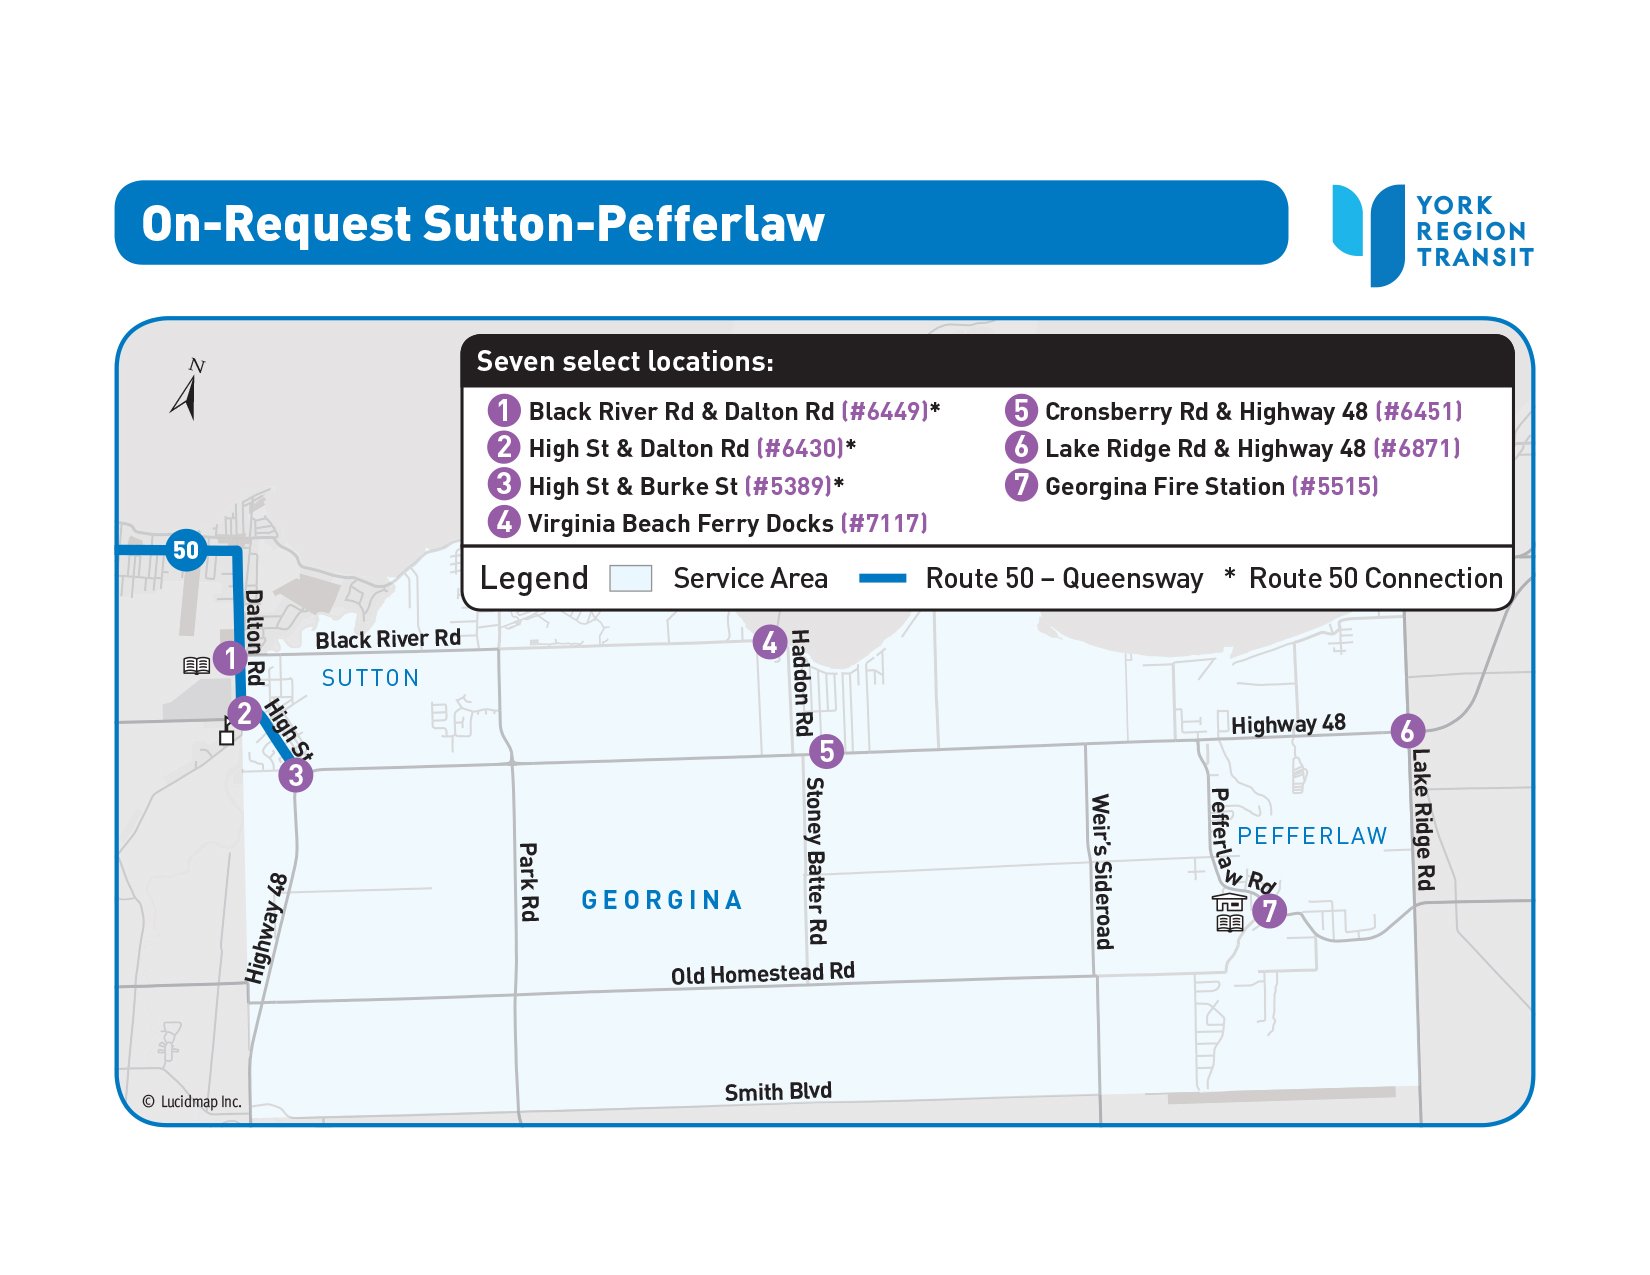 On-Request Sutton-Pefferlaw service area map